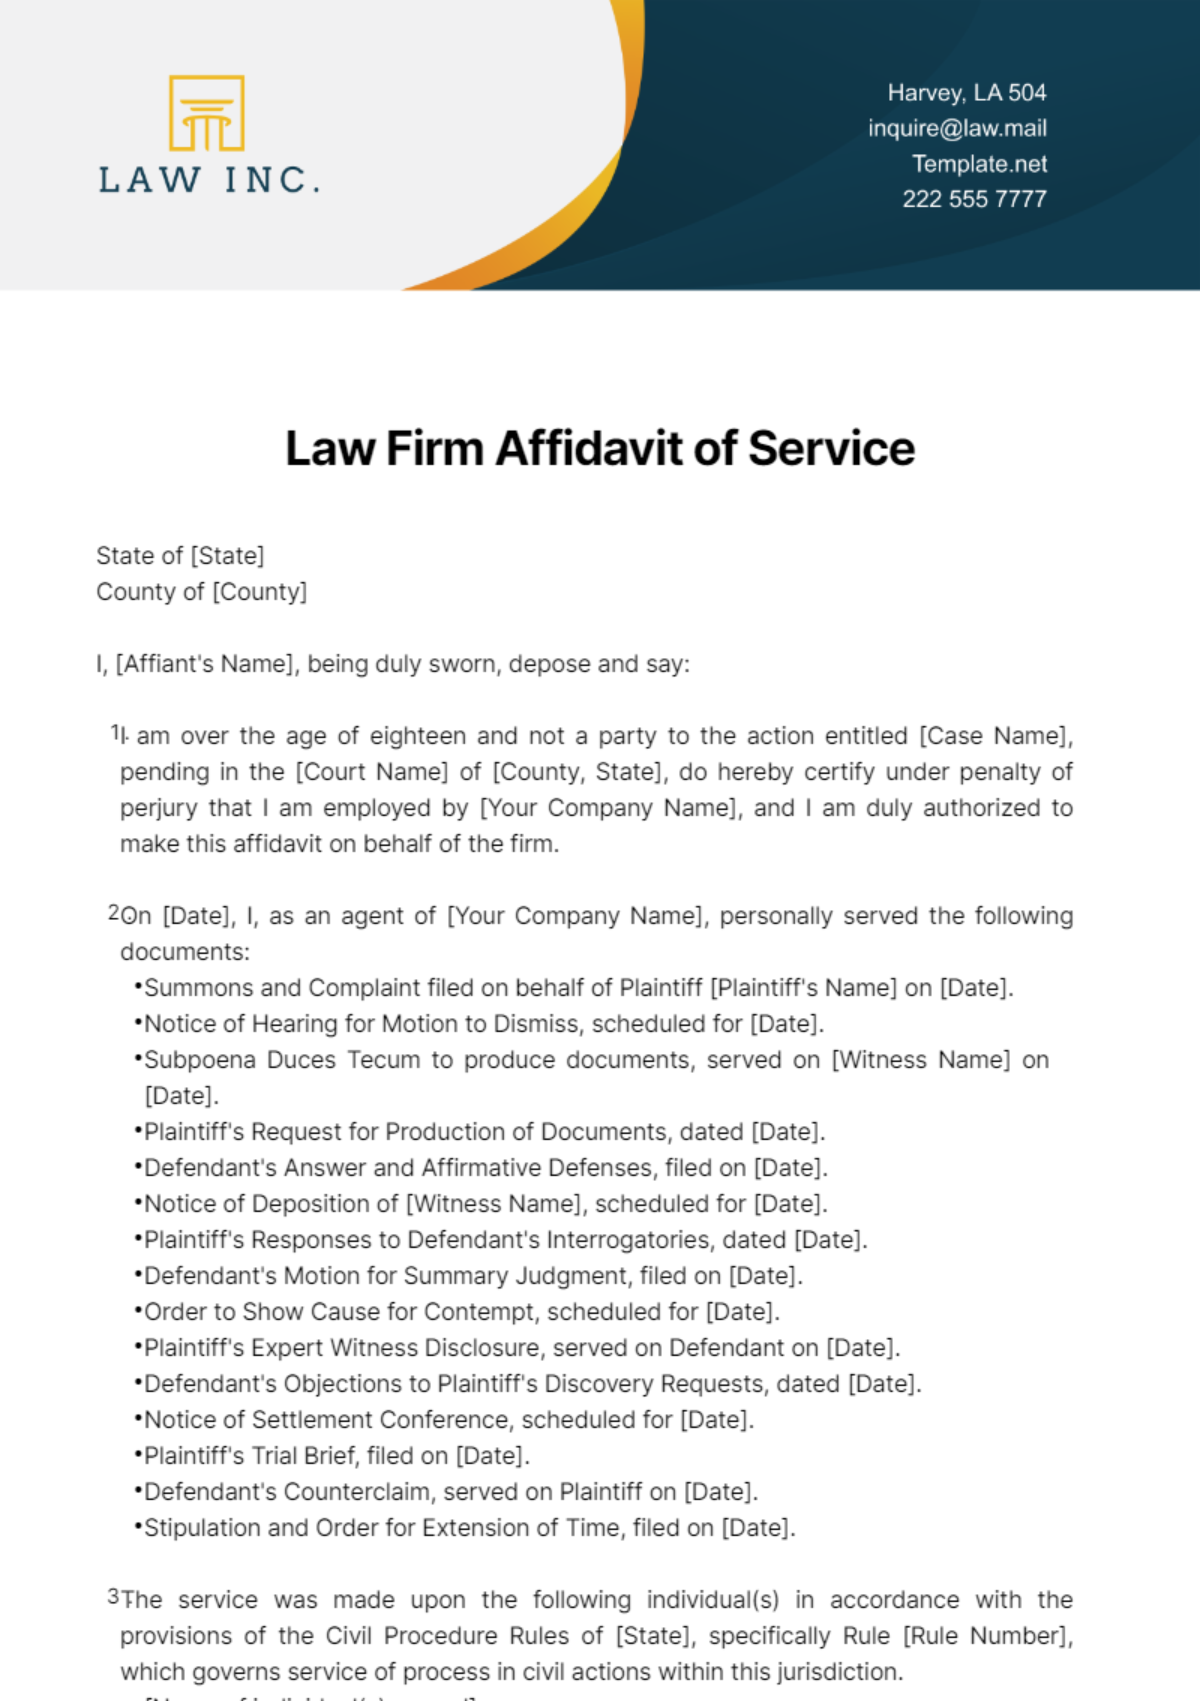 Law Firm Affidavit of Service Template